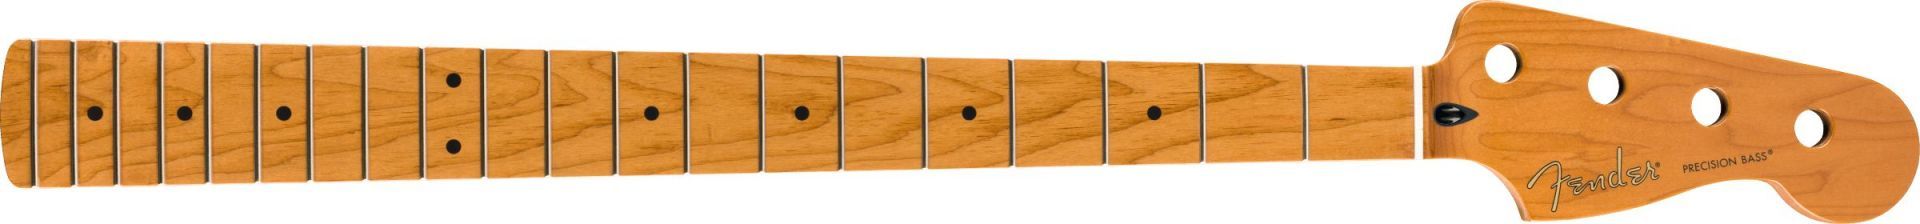 Fender Roasted Maple Precision-Bass Neck 20 Medium Jumbo Frets 9.5